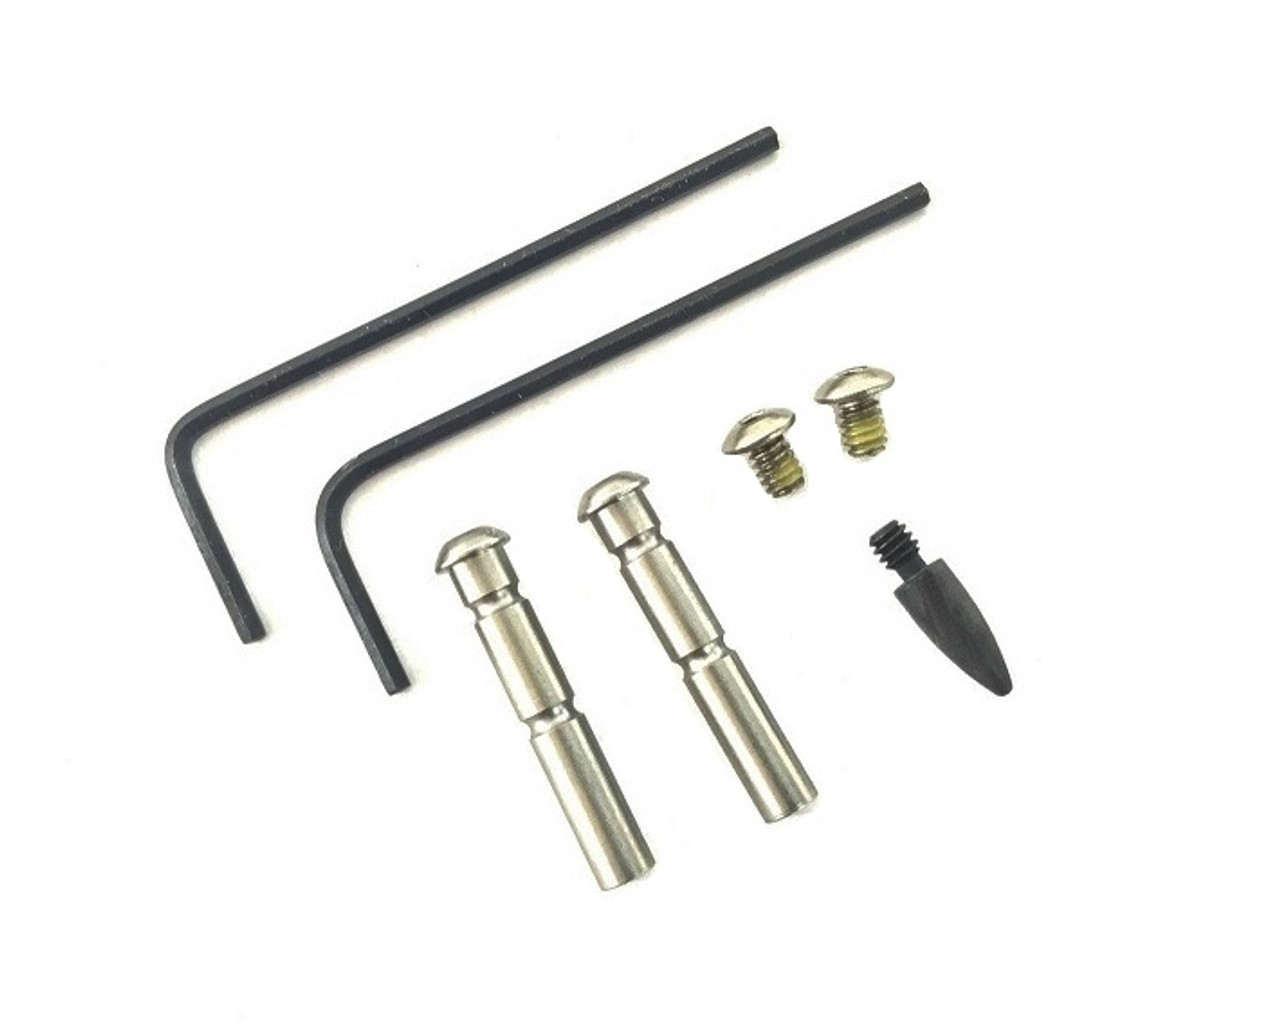 Strike Industries Anti-walk/Anti-rotation Trigger/Hammer Pins